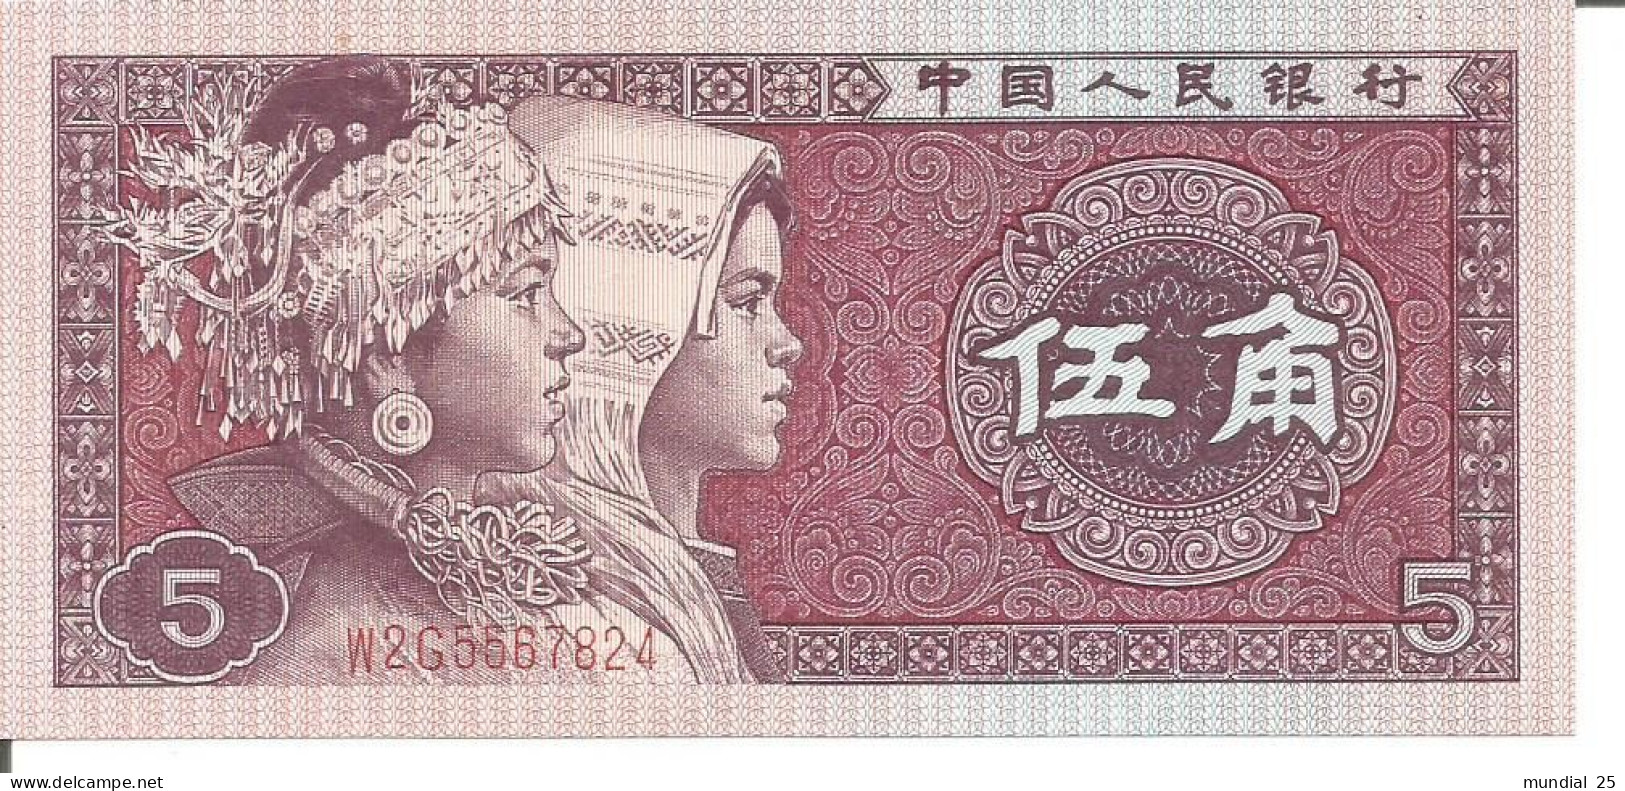 3 CHINA NOTES 5 JIAO 1980 - Chine